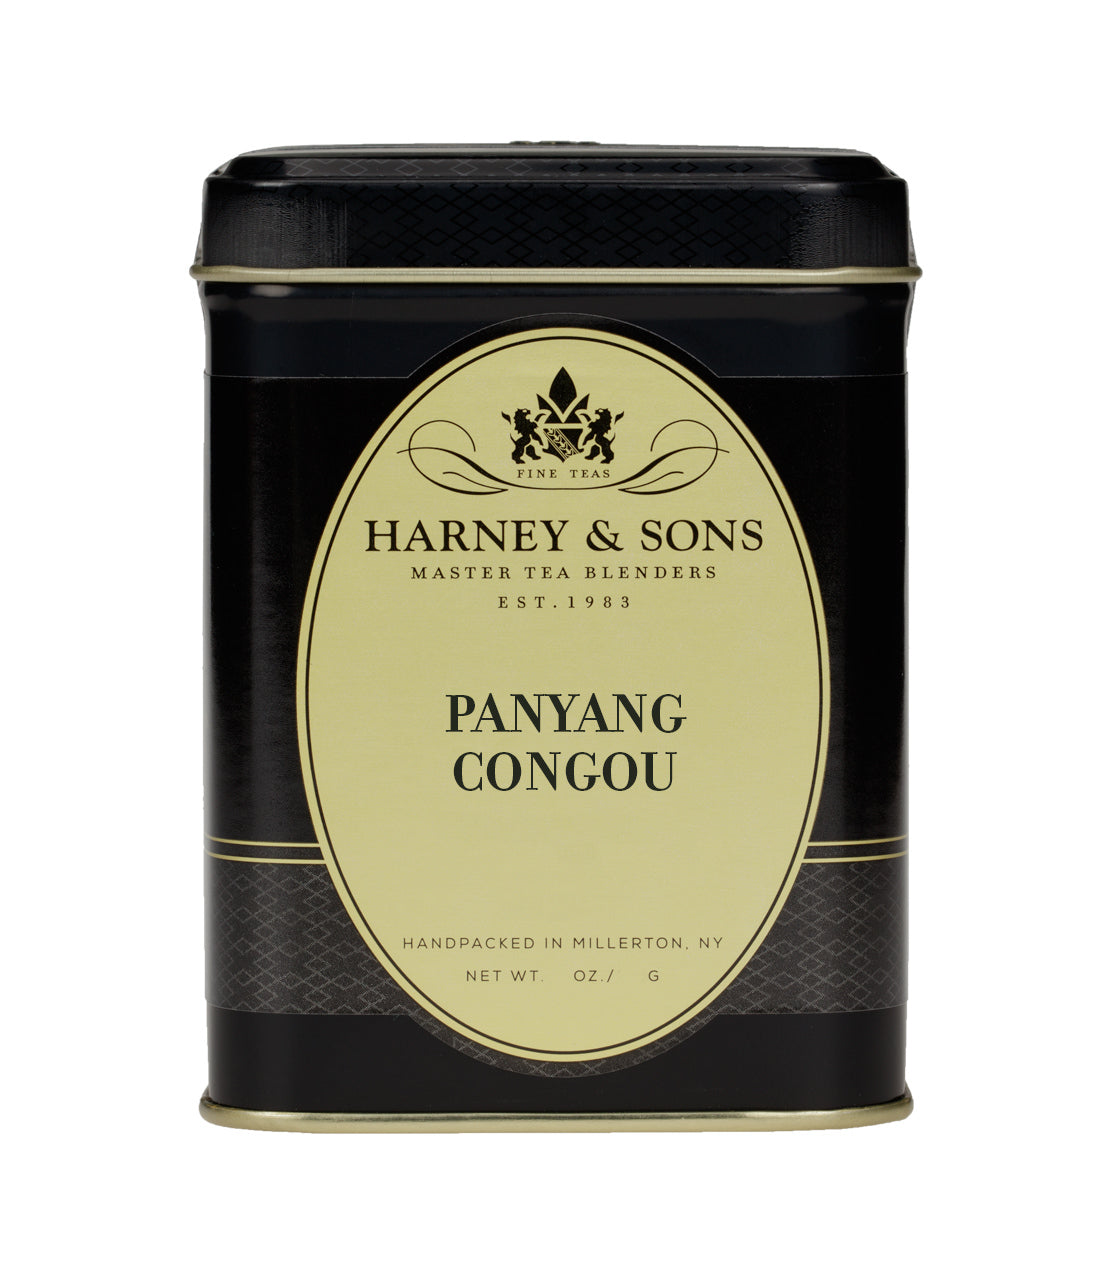 Panyang Congou - Loose 2 oz. Tin - Harney & Sons Fine Teas